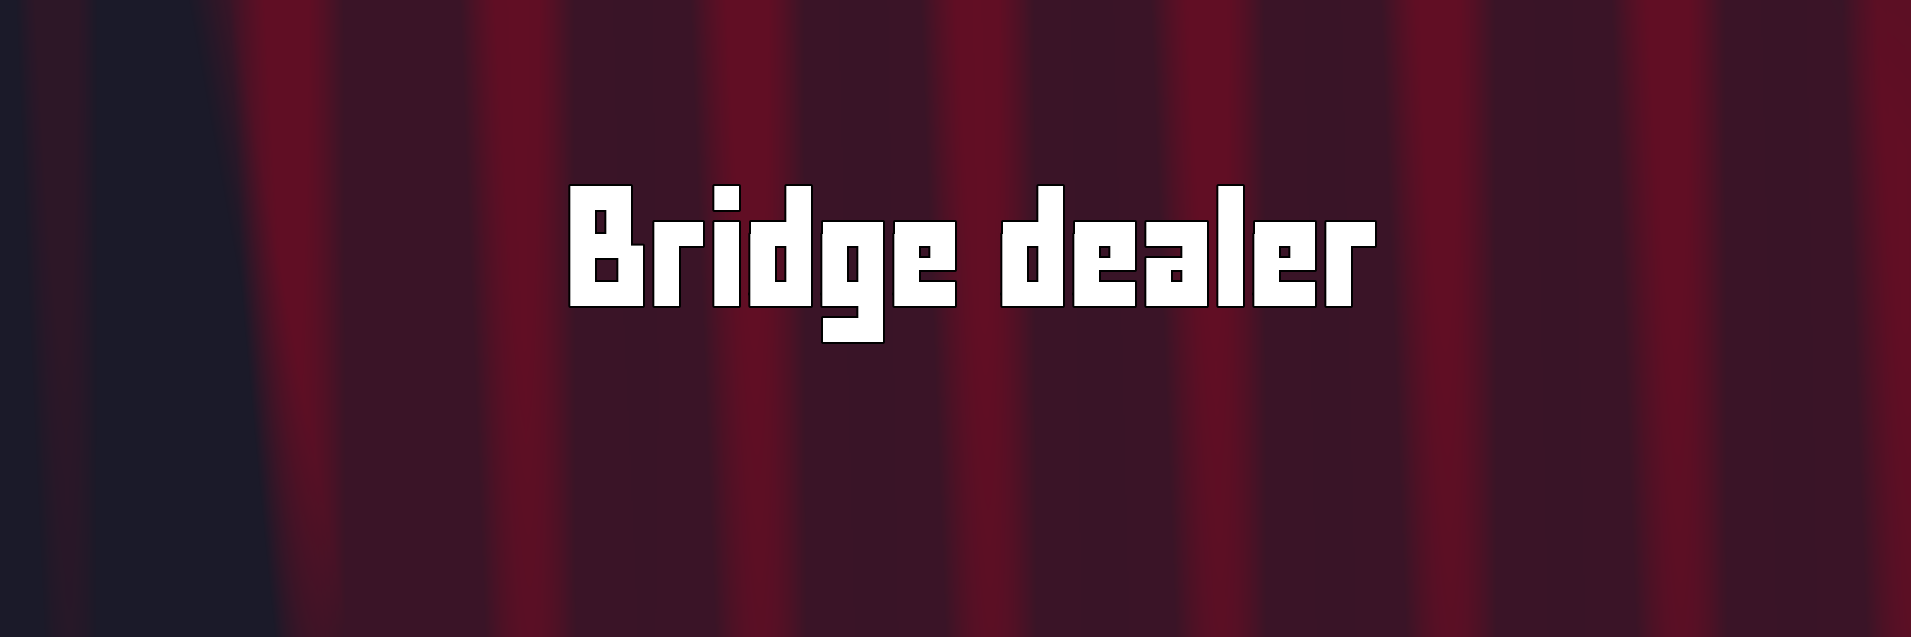 Bridge Dealer